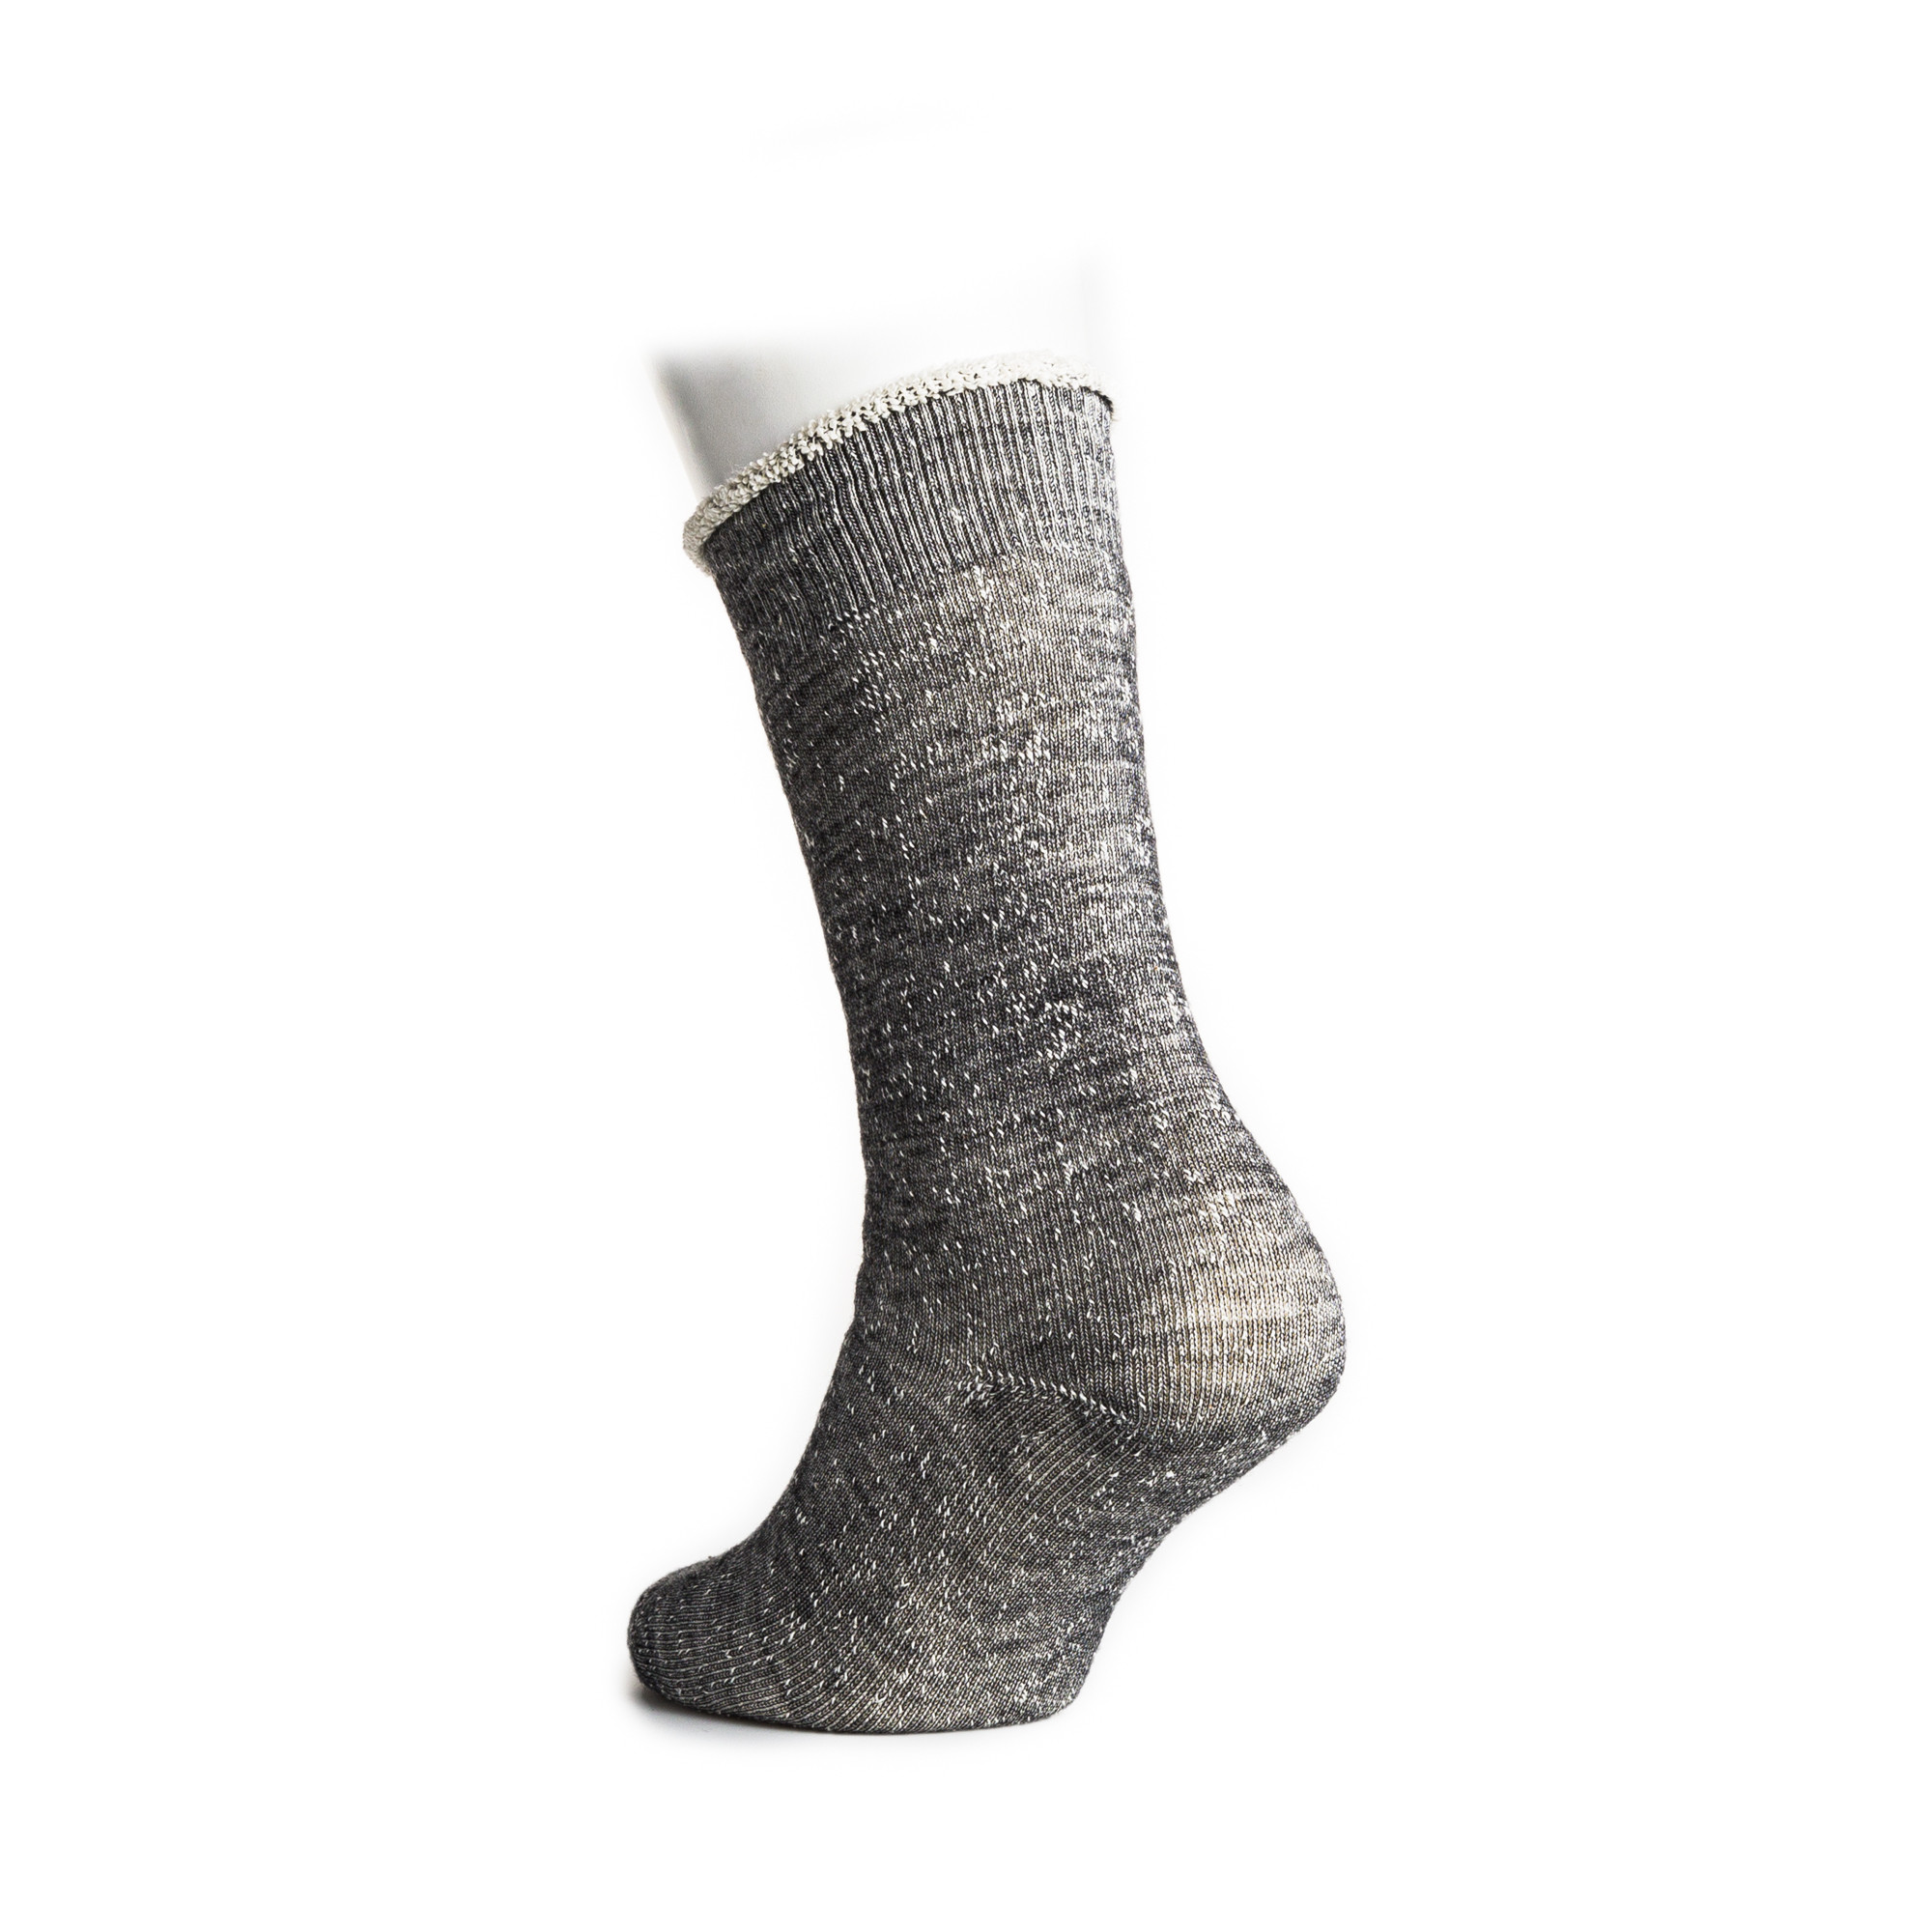 Rototo - Double Face Merino Wool Socks in Charcoal